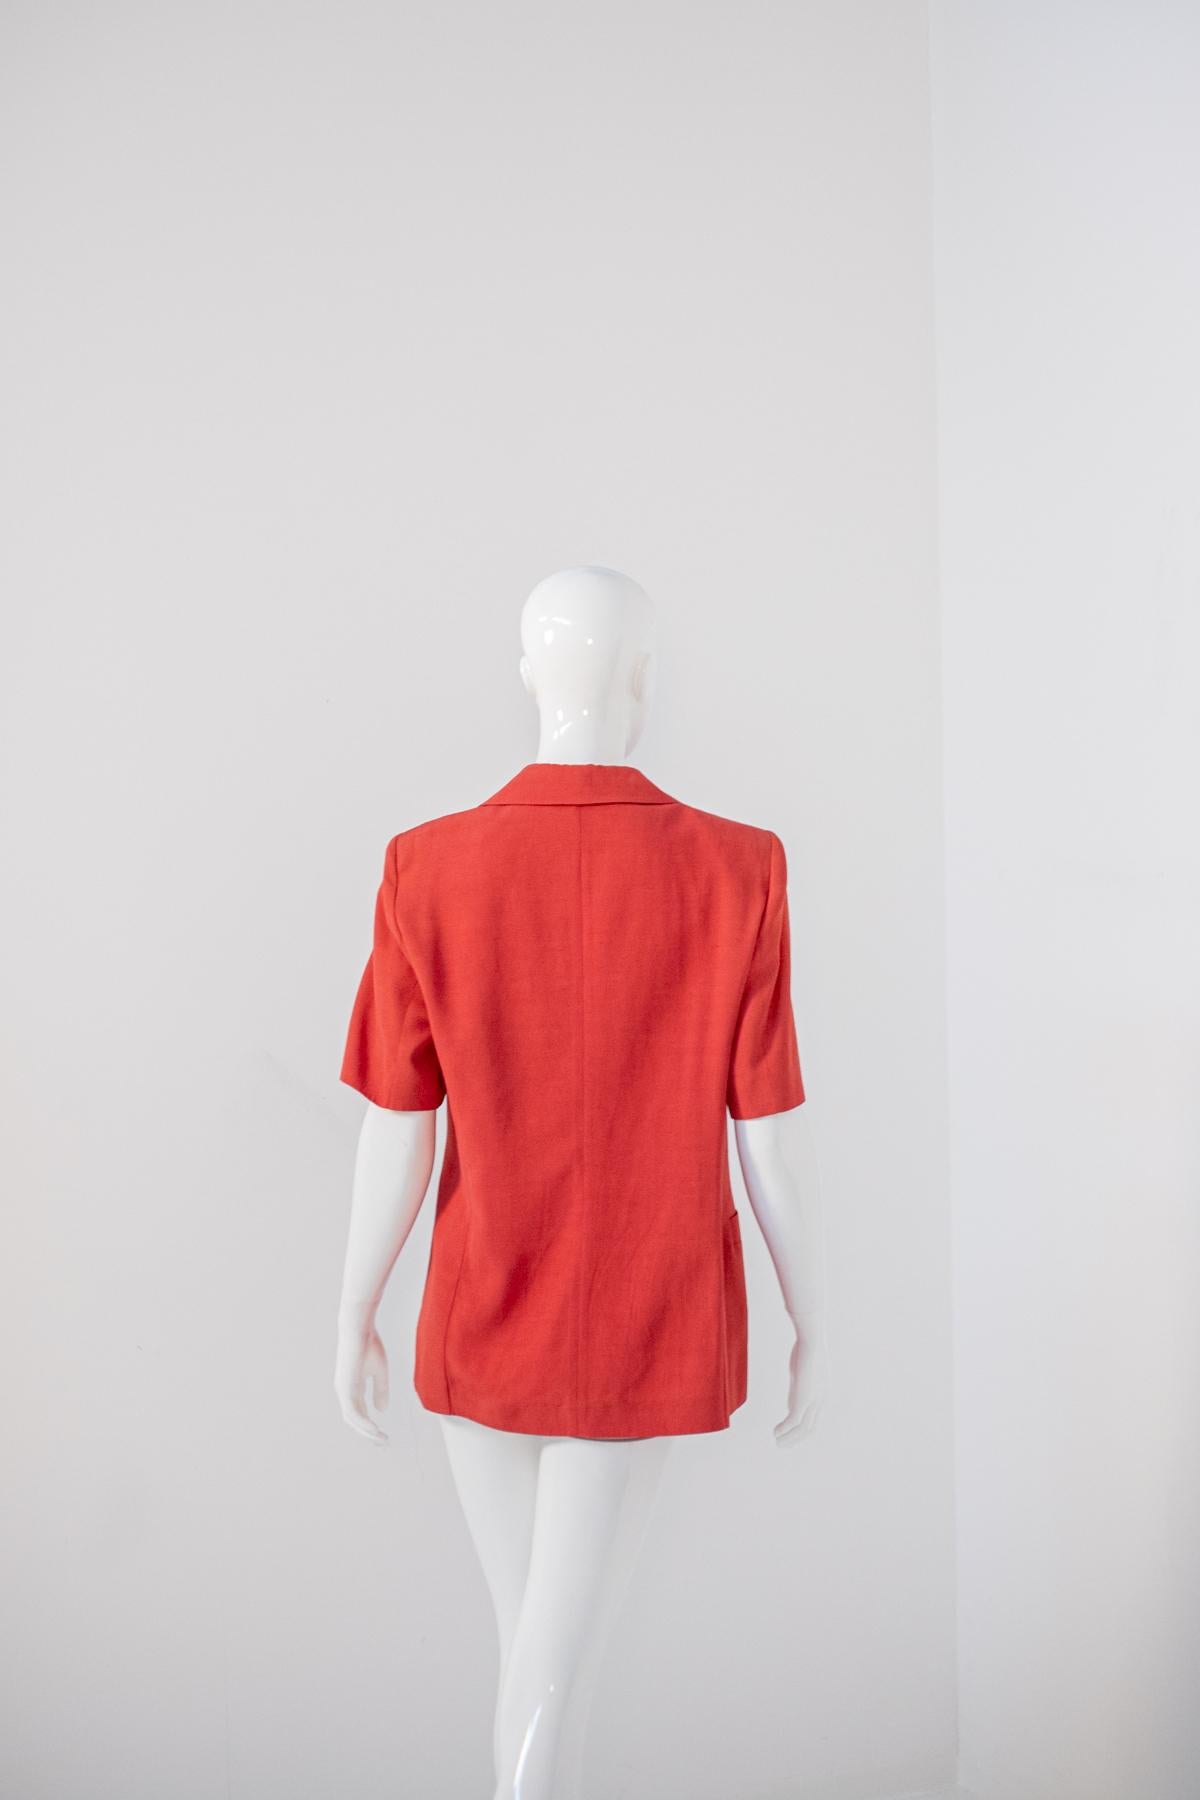 Gattinoni Stylish Vintage Red Blazer For Sale 1